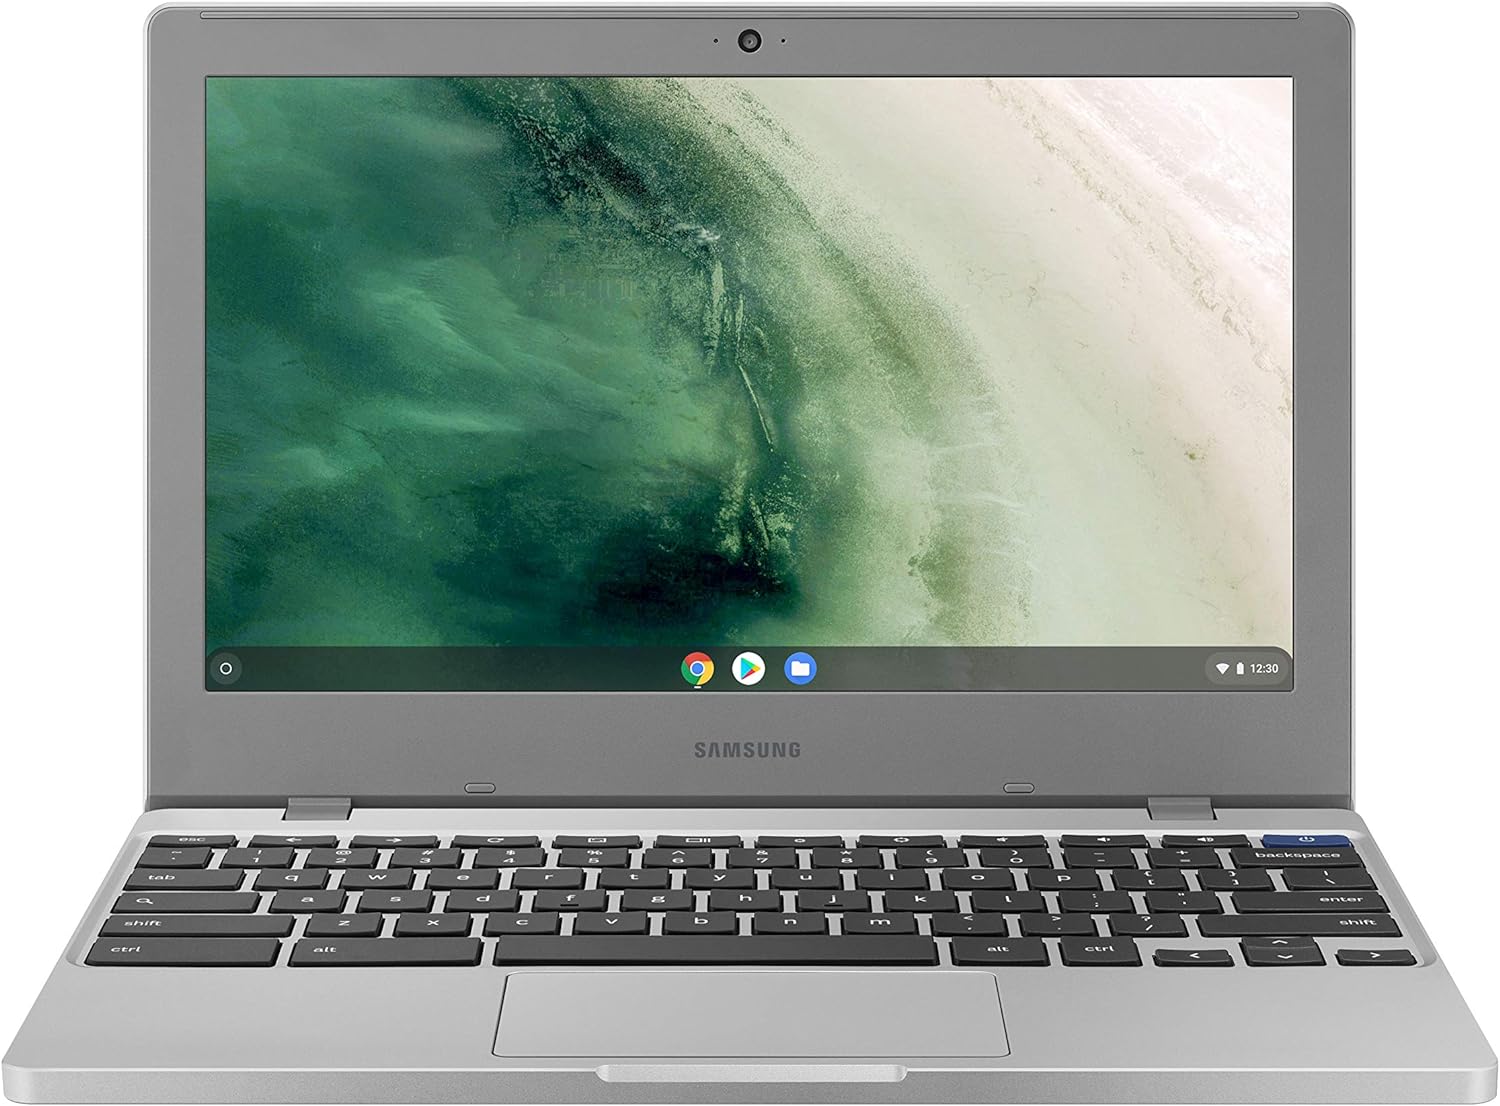 Samsung XE310XBAK02US Chromebook 4 11.6-Inch Laptop - Samsung Parts USA